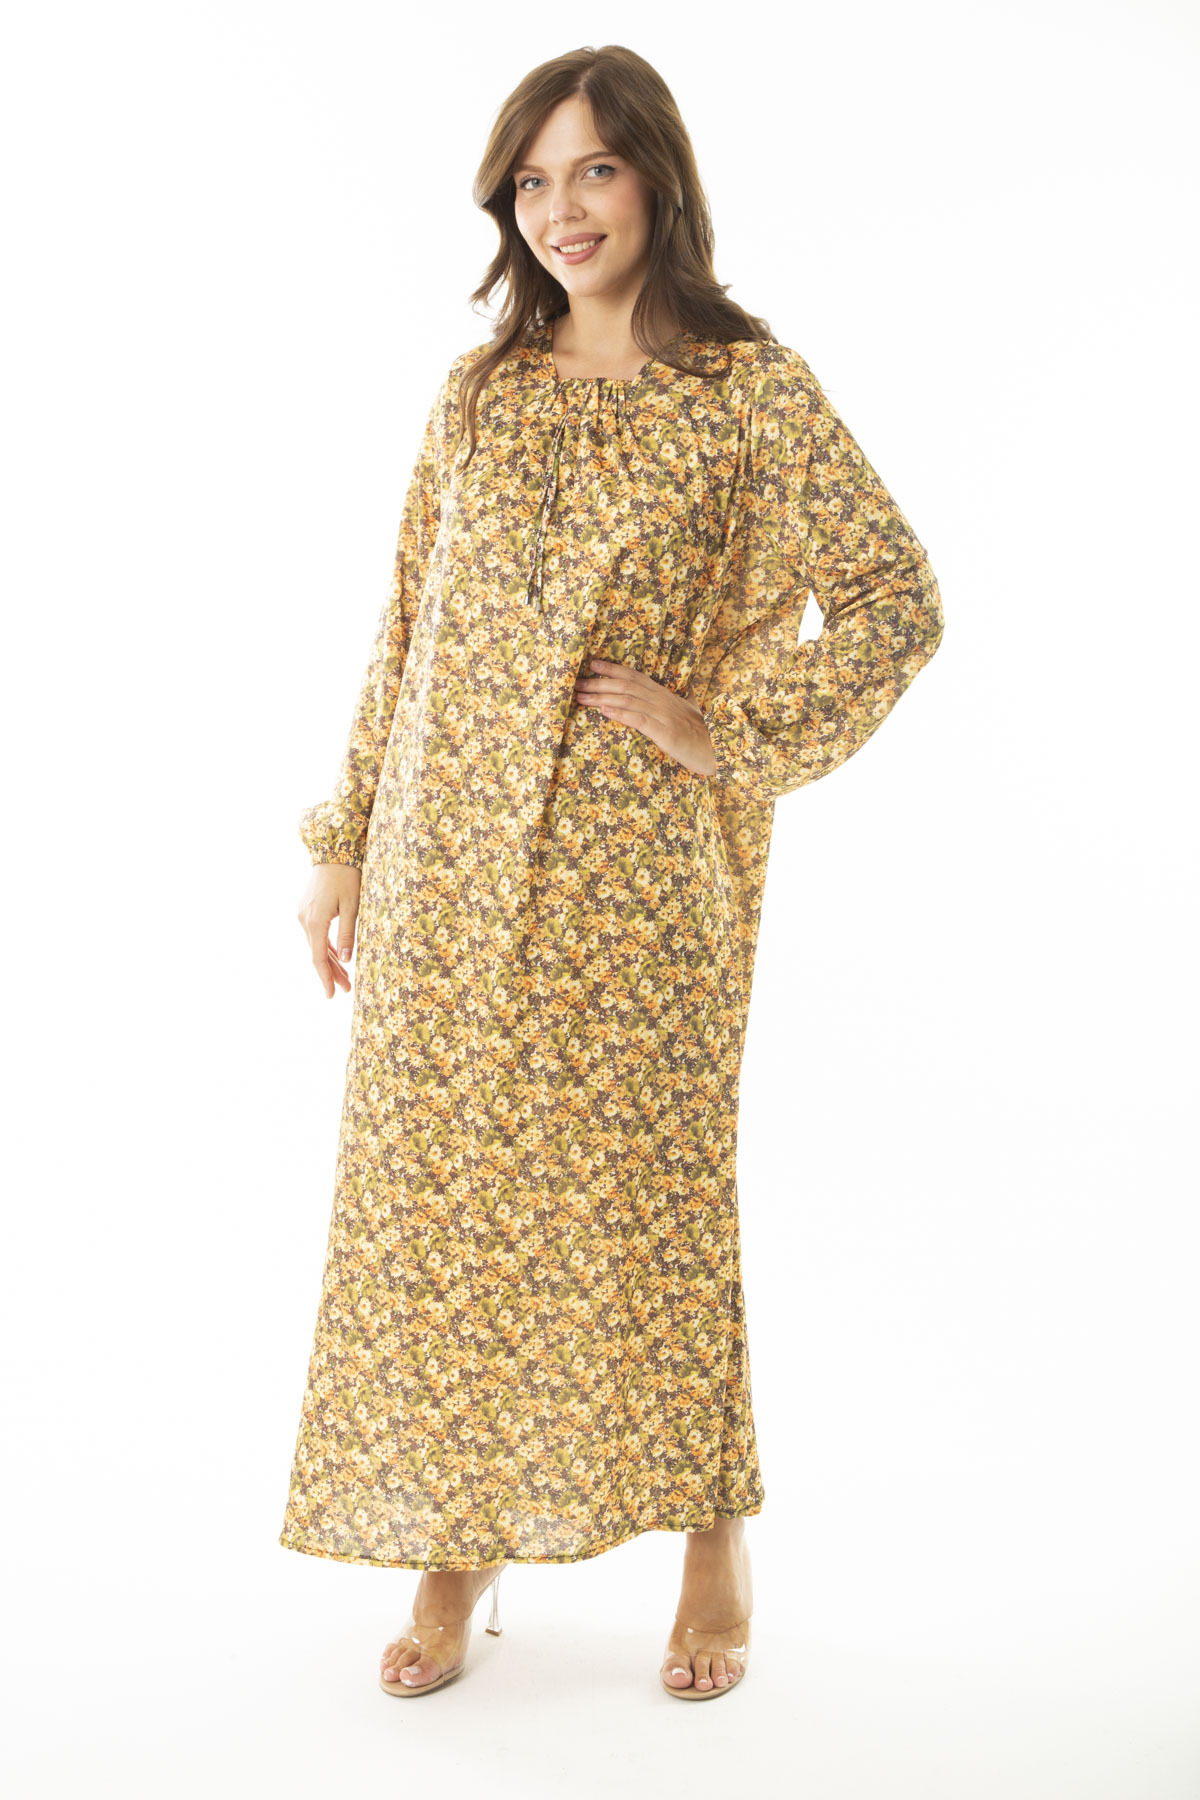 Şans Women's Plus Size Saffron Long Dress With Smocking And Elastic Sleeves Detailed Long Dress